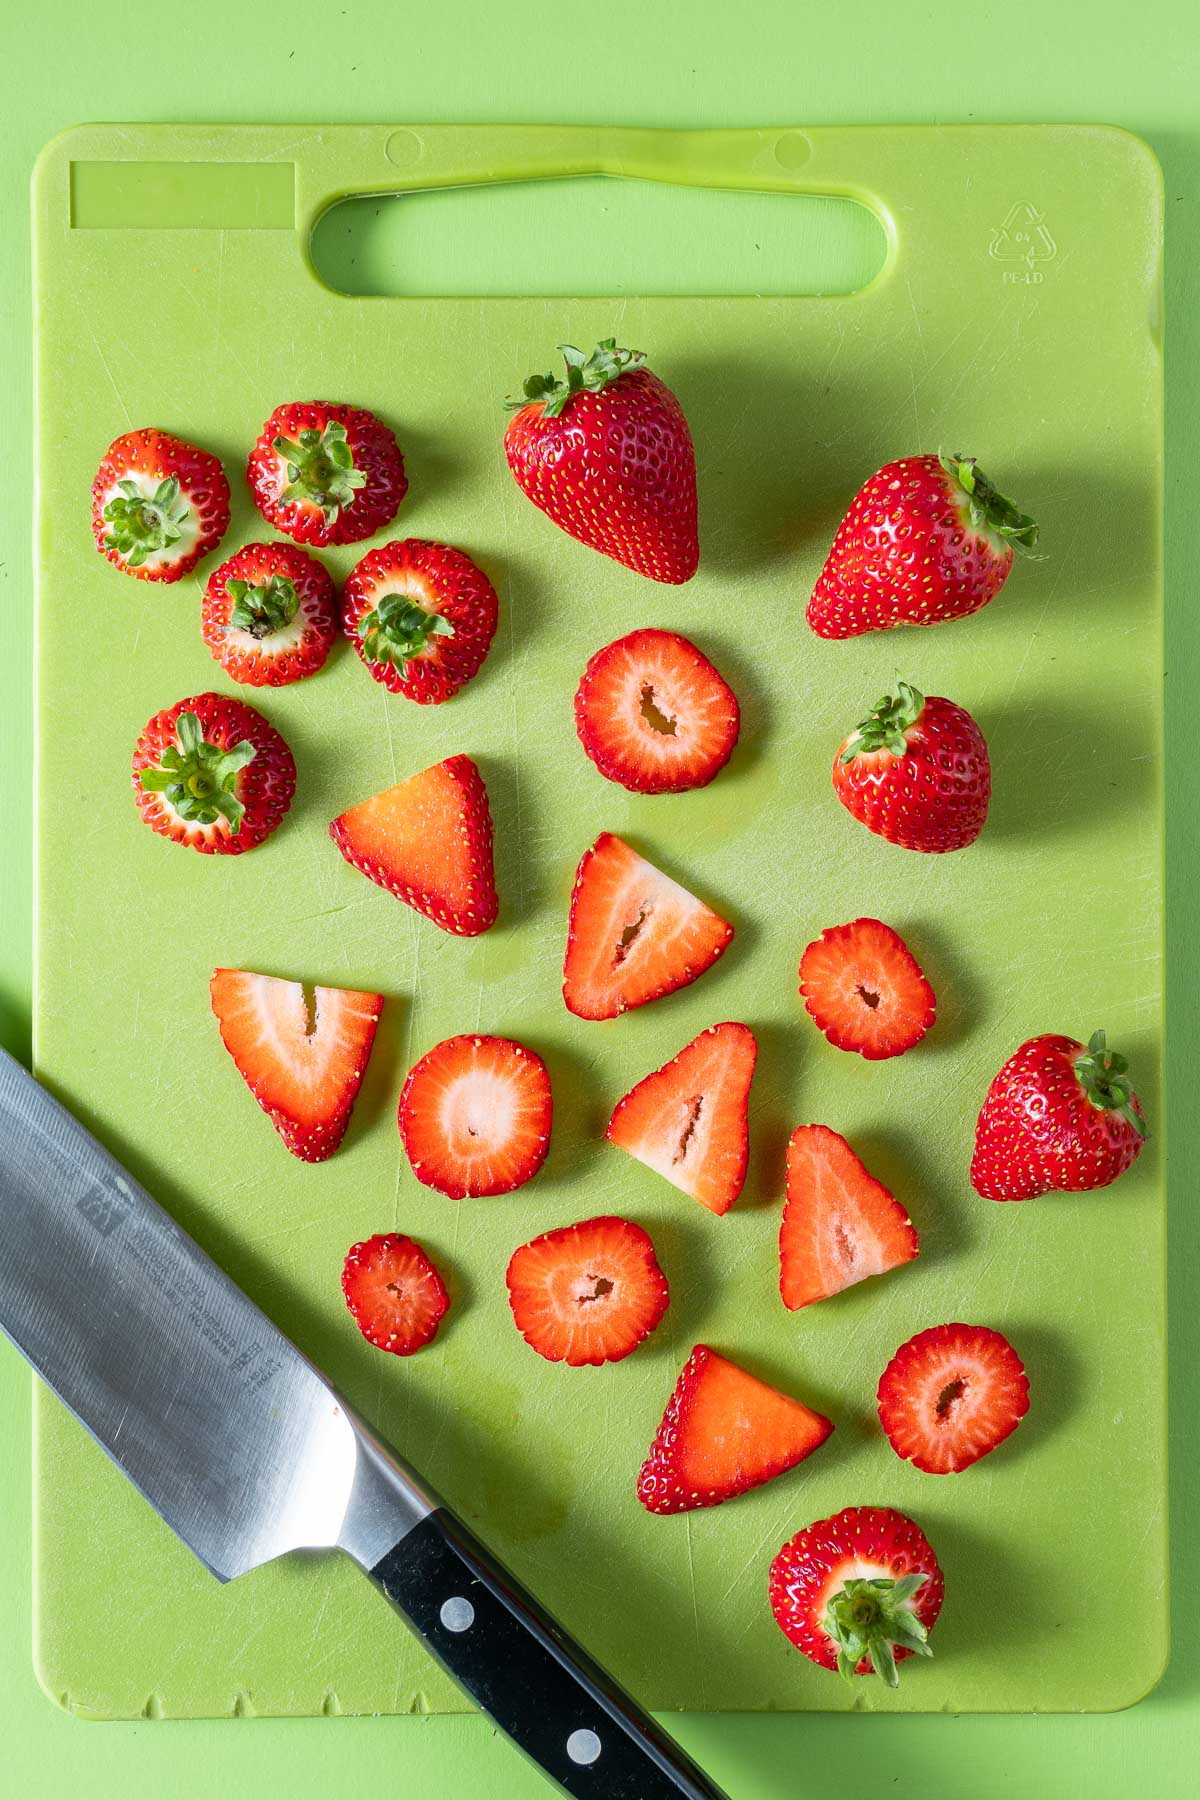 Strawberries sliced on a green cutting board